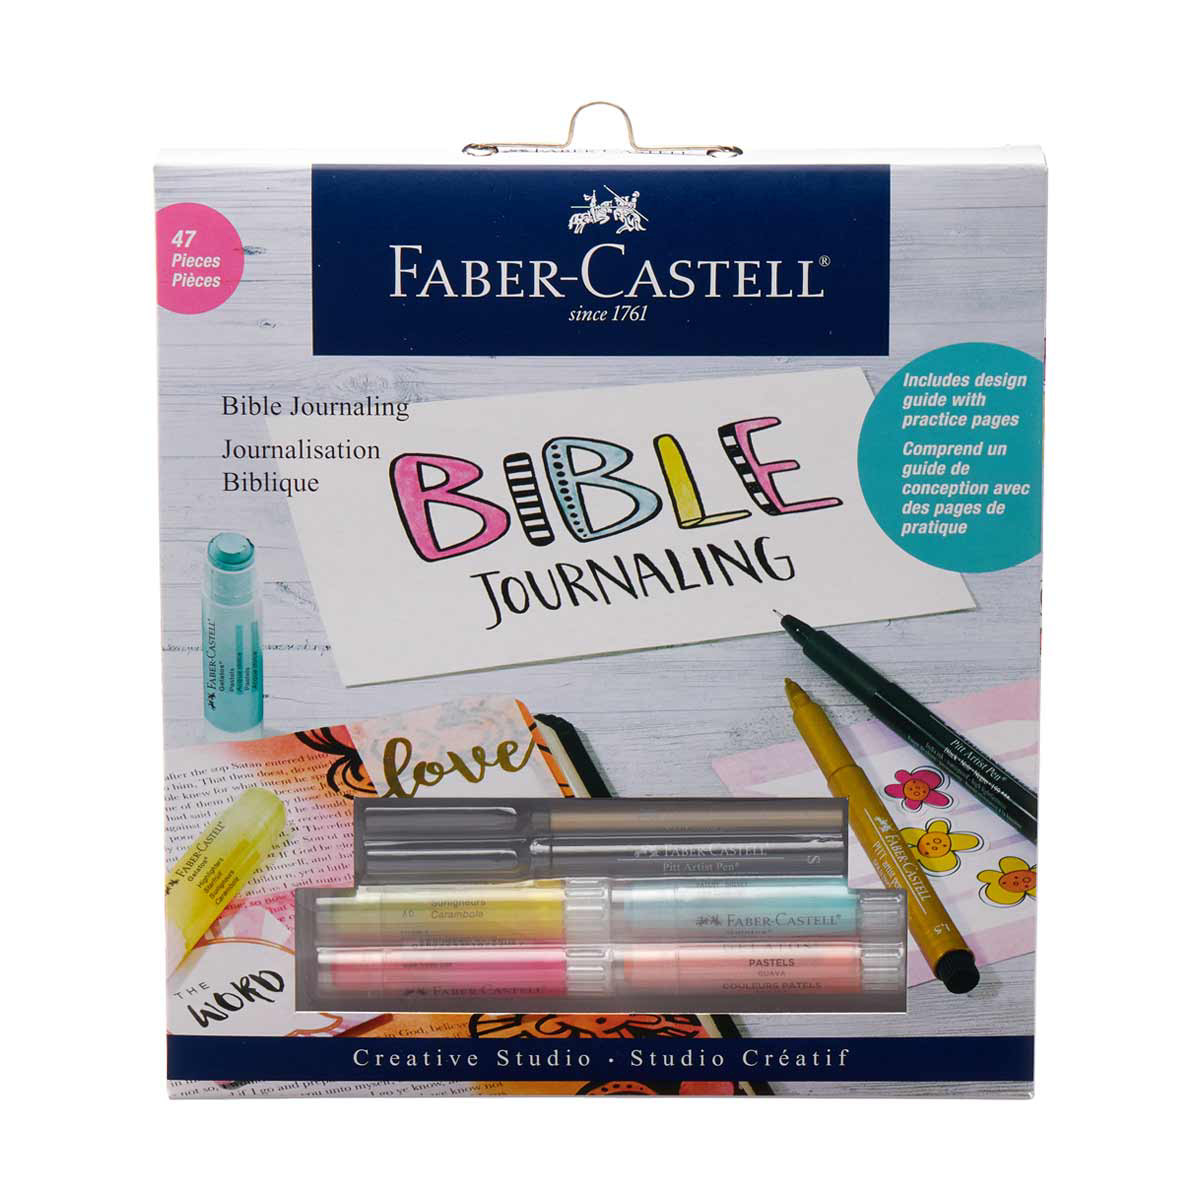 Faber-Castell 47-Piece Bible Journaling Kit